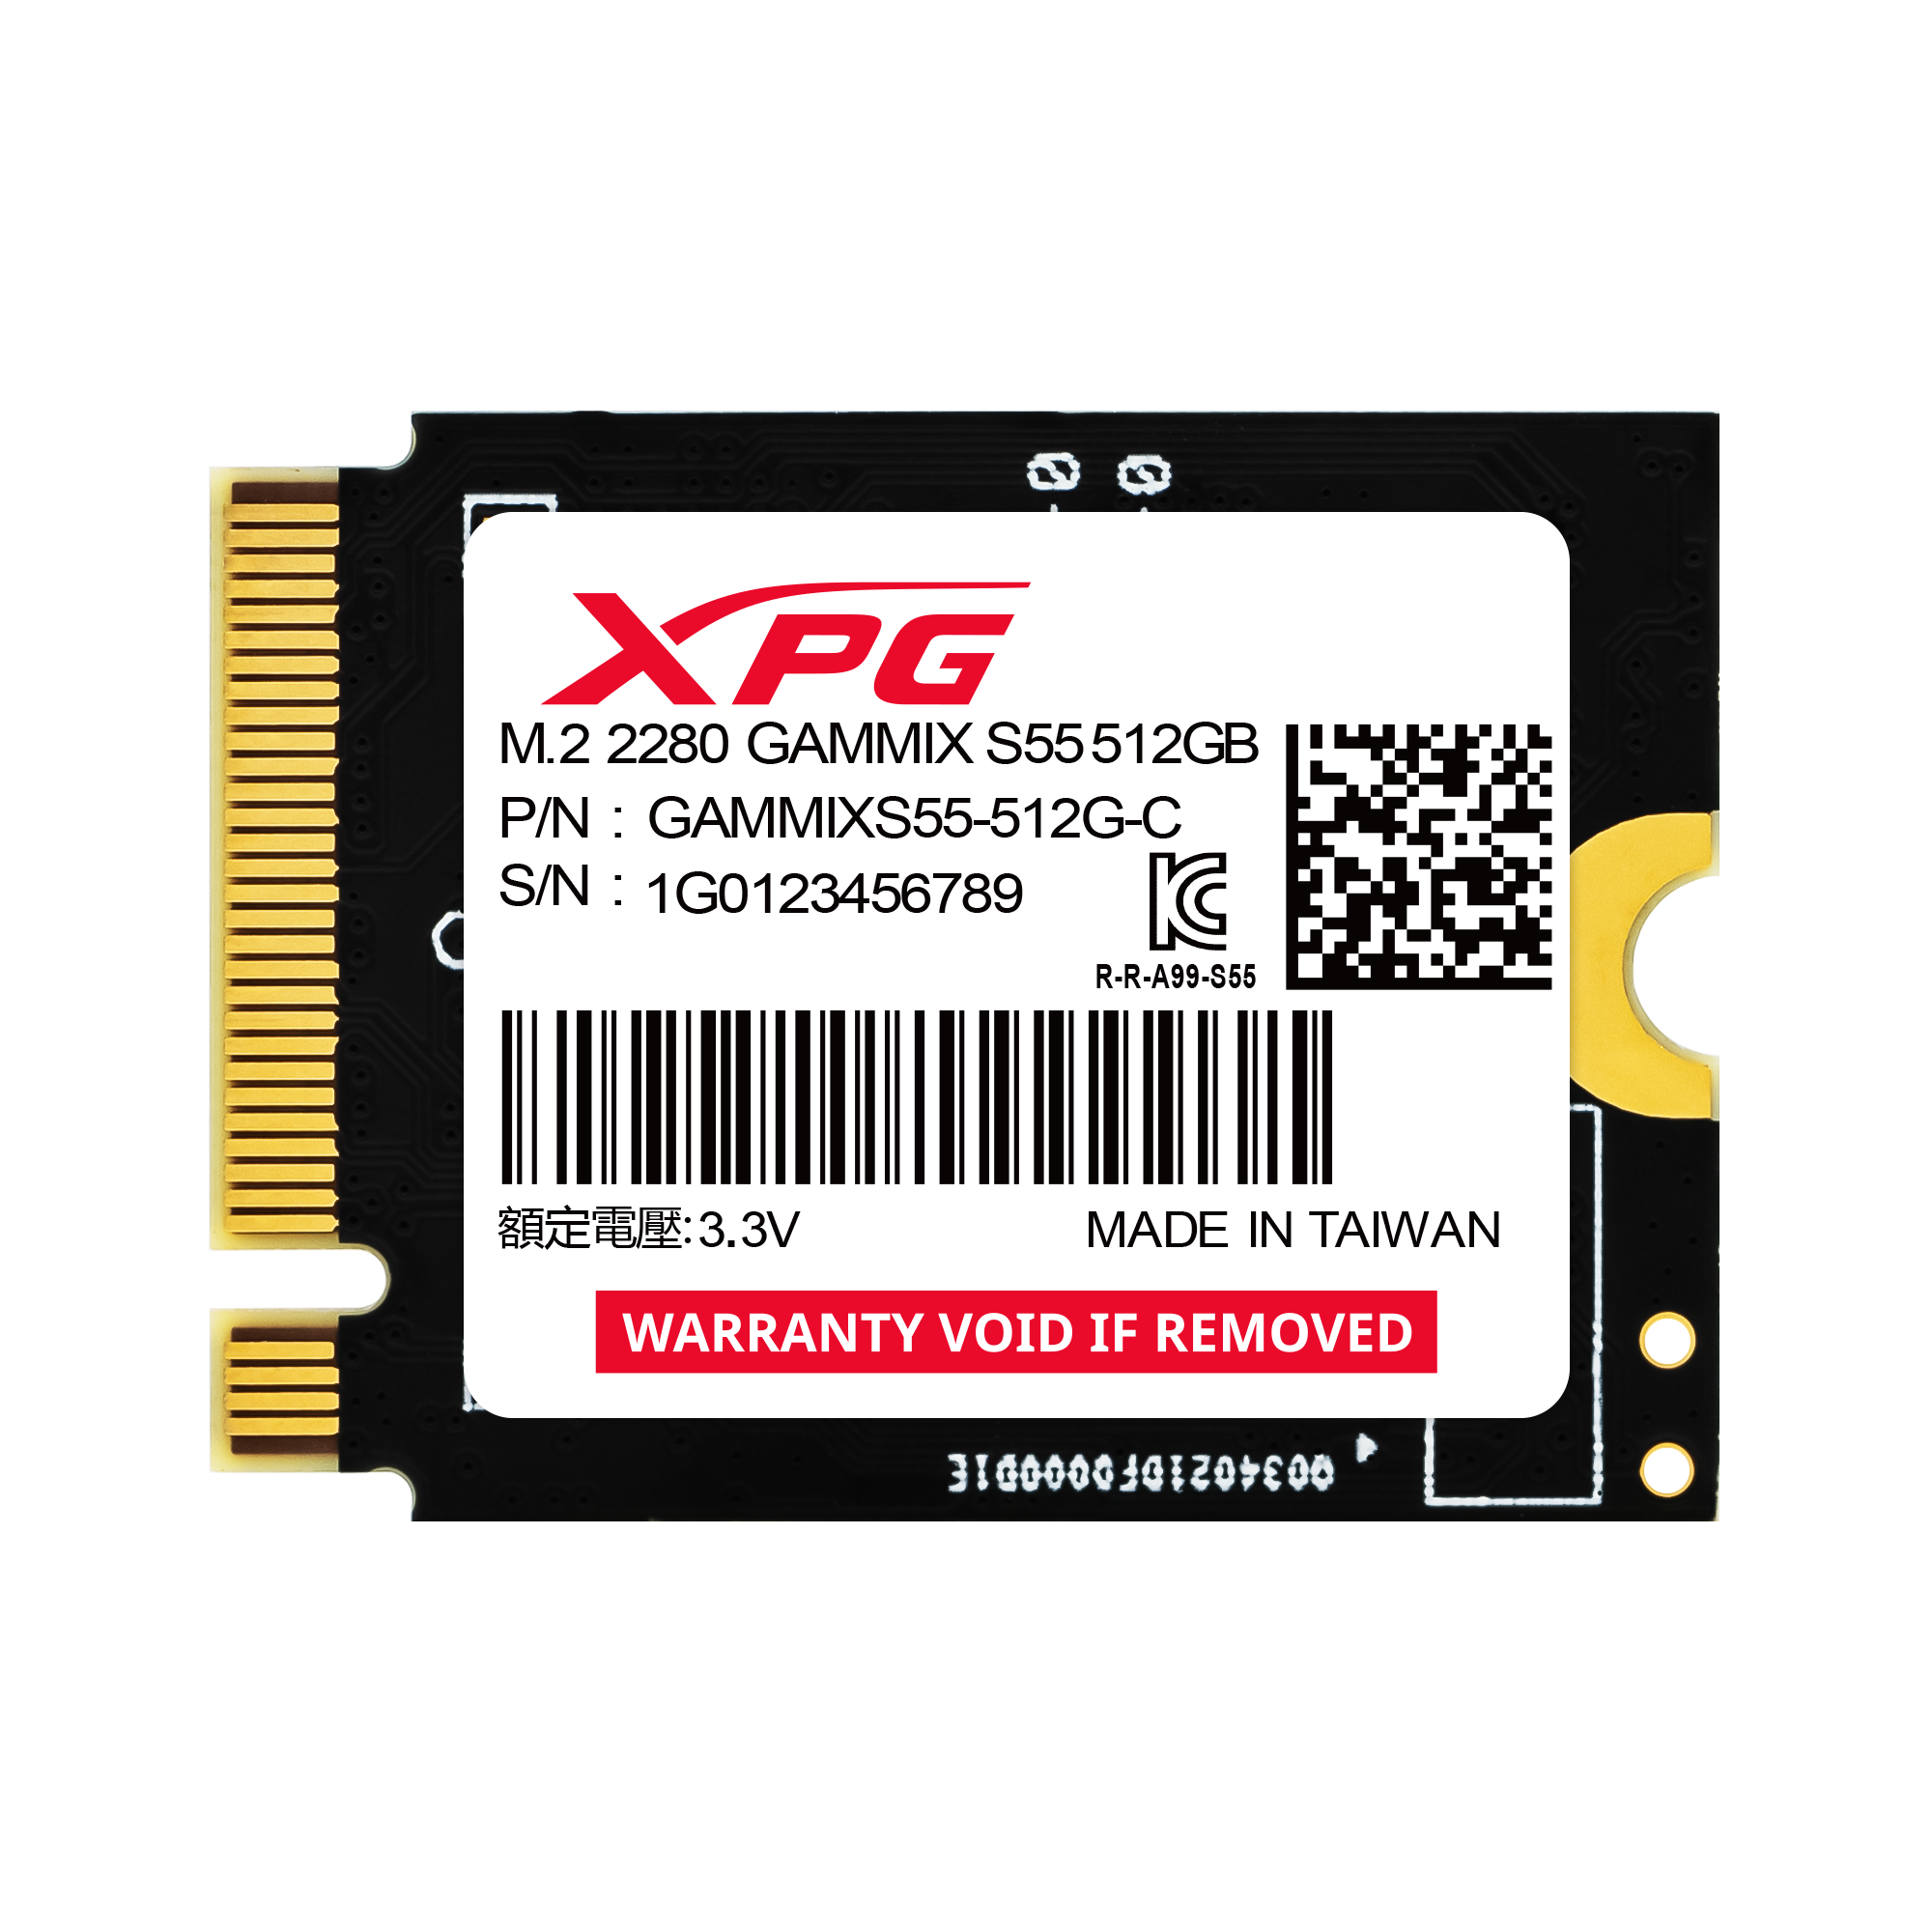 Adata Gammix S55 512GB PCIe Gen 4.0 M.2 2230 Solid State Drive